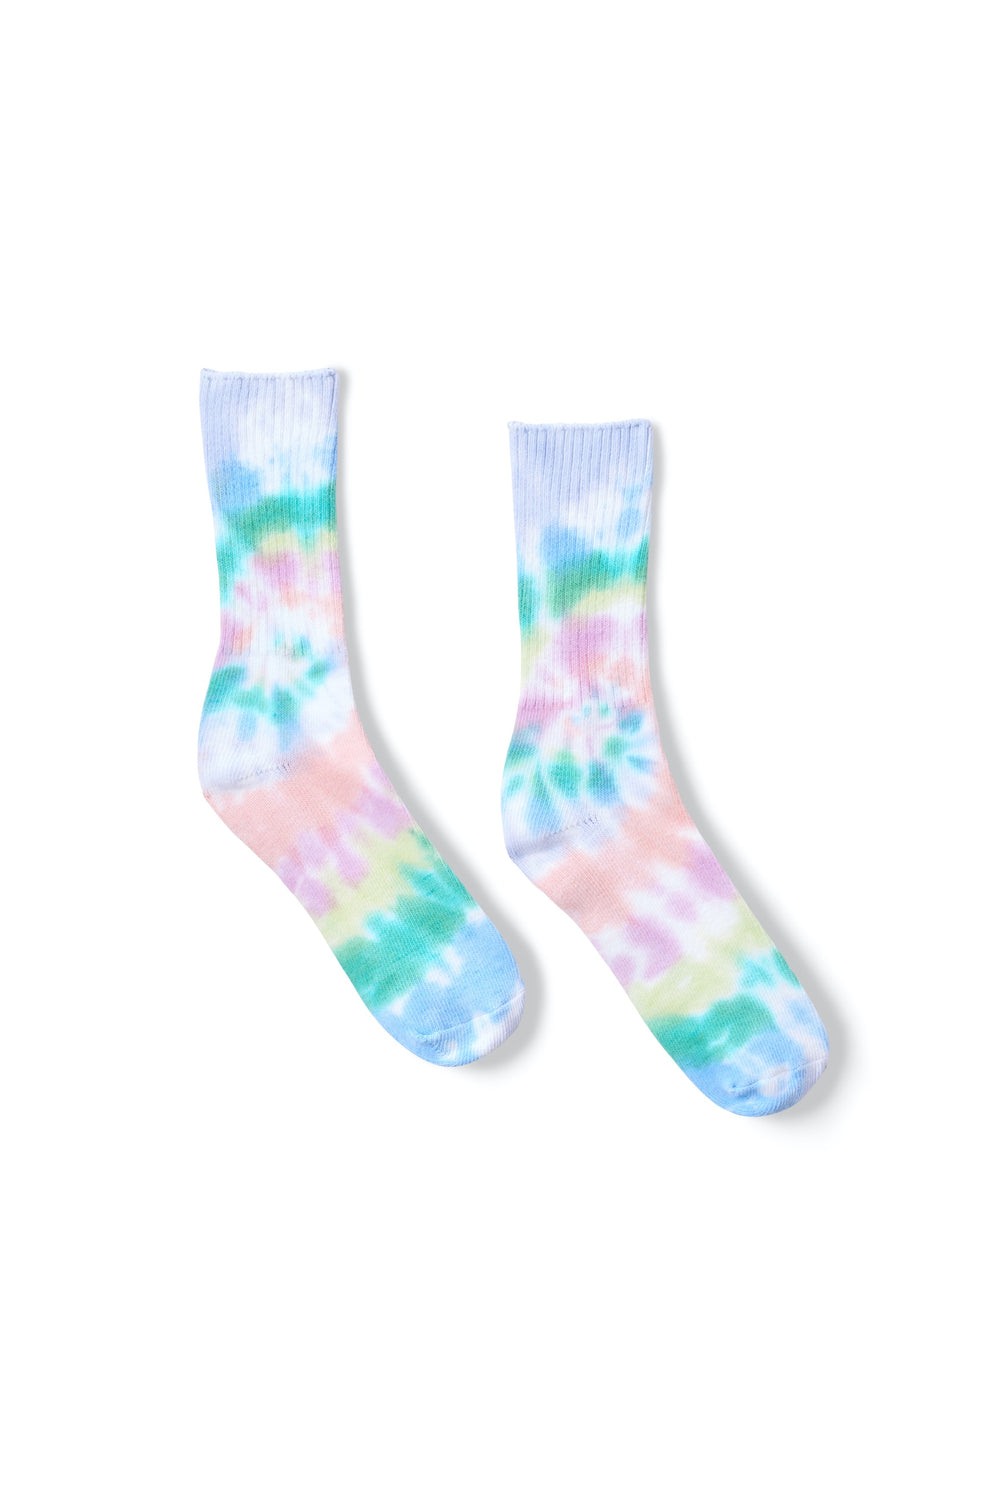 Prismatic Tie Dye Socks